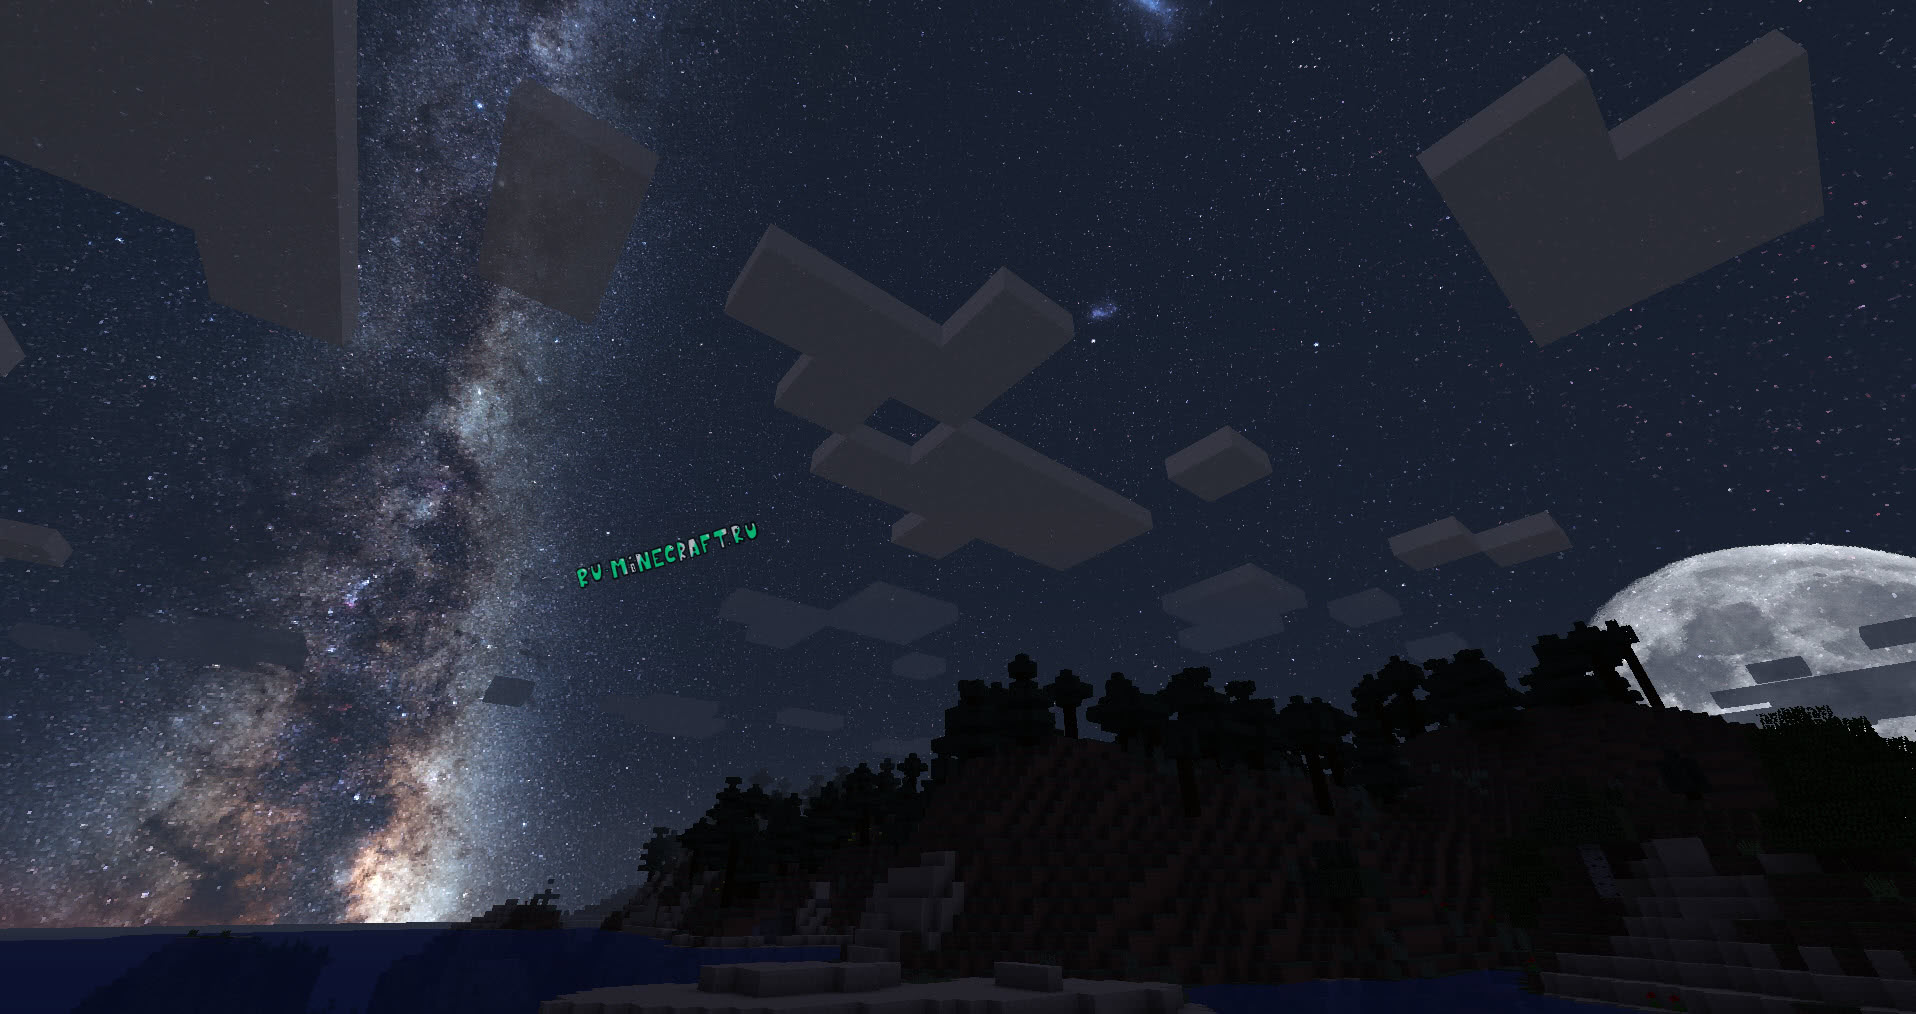 Milkyway Galaxy Night Sky - текстуры звездного неба [1.16.5] [1.15.2] [1.12.2] [1.7.10] [512x] » Скачать Текстуры для майнкрафт, текстур паки